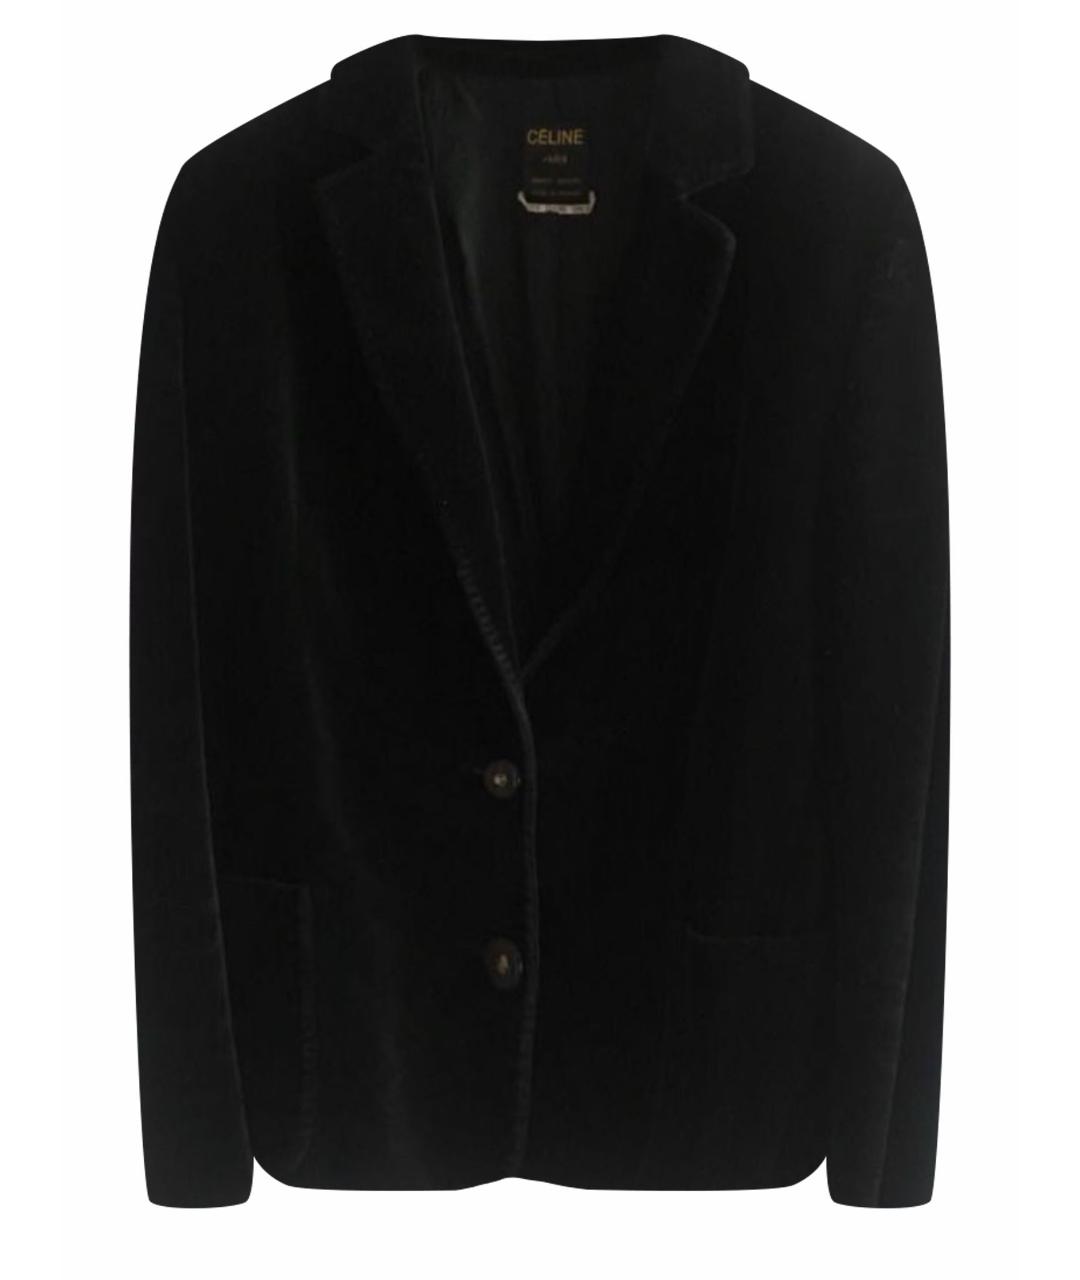 CELINE PRE-OWNED Черный велюровый жакет/пиджак, фото 1